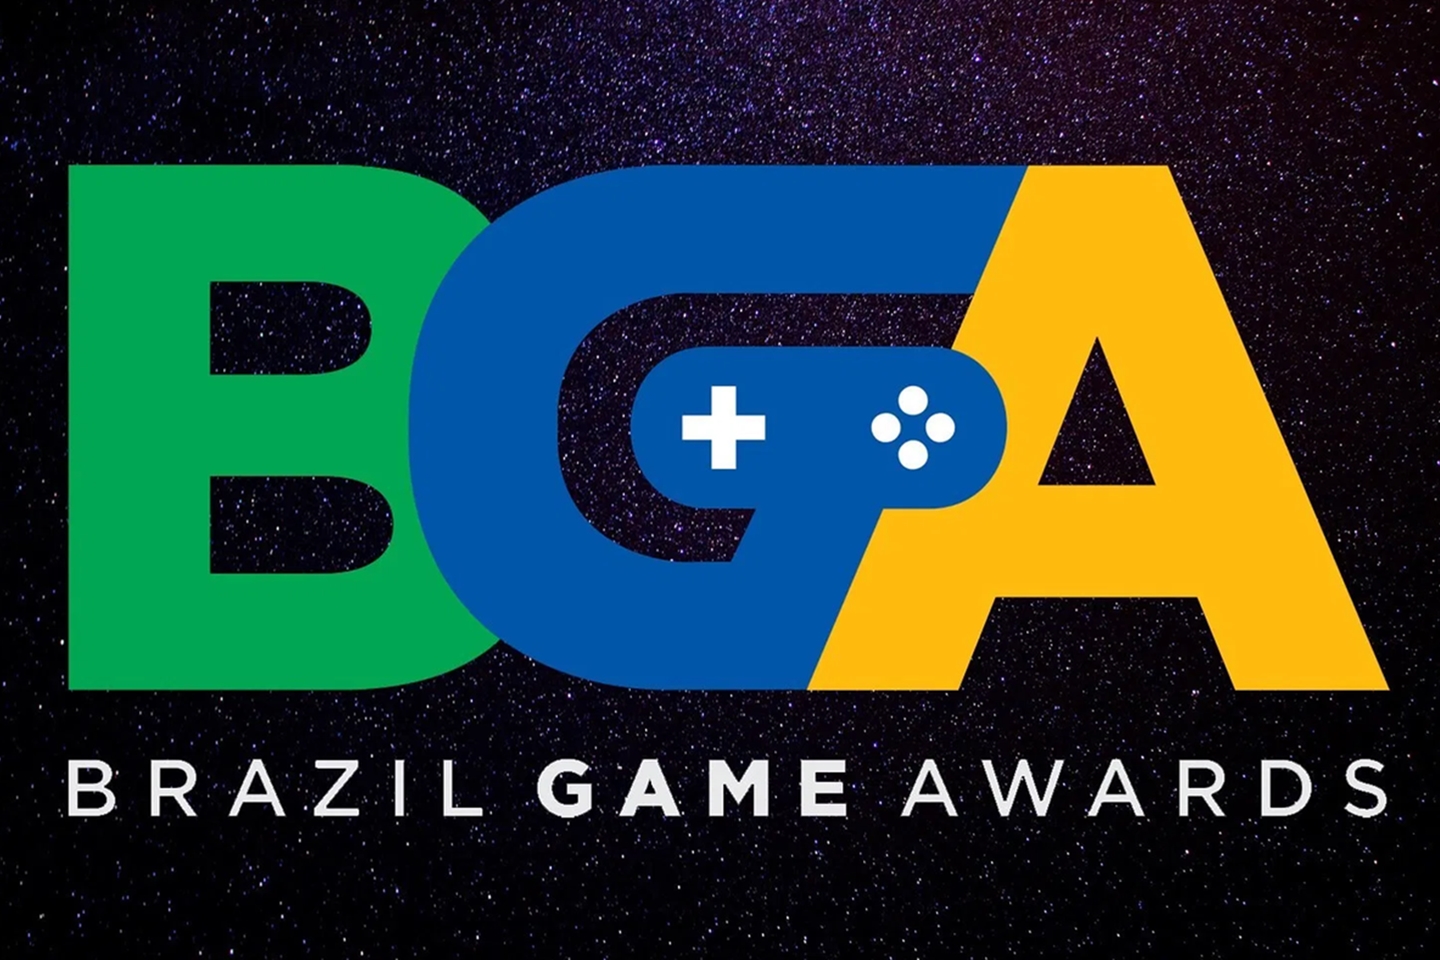 The Game Awards anuncia os candidatos para jogo do ano